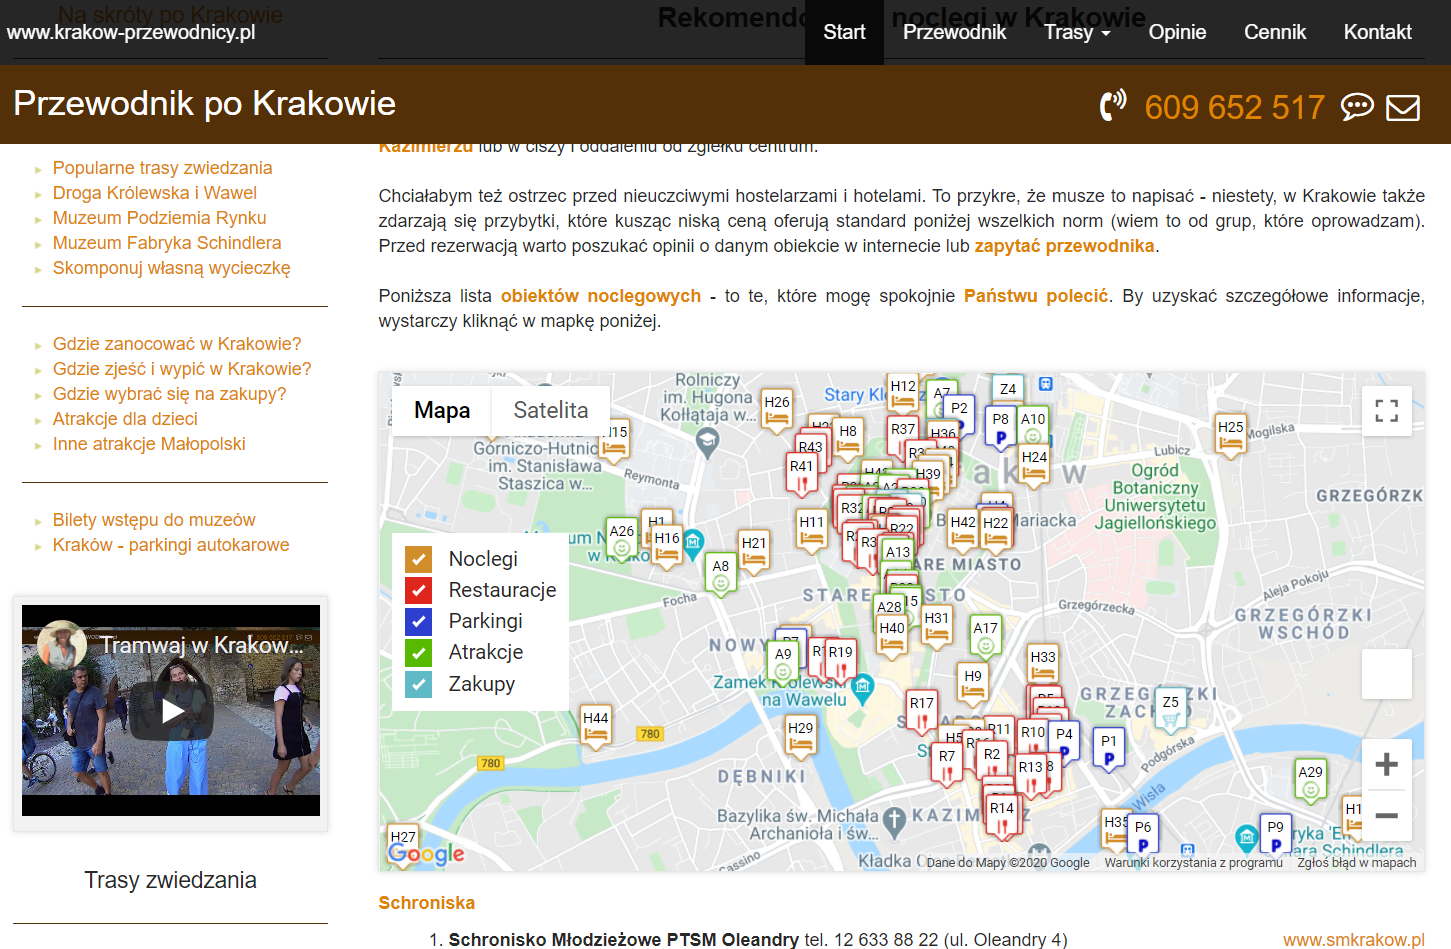 map of interesting places in Krakow wordpress development